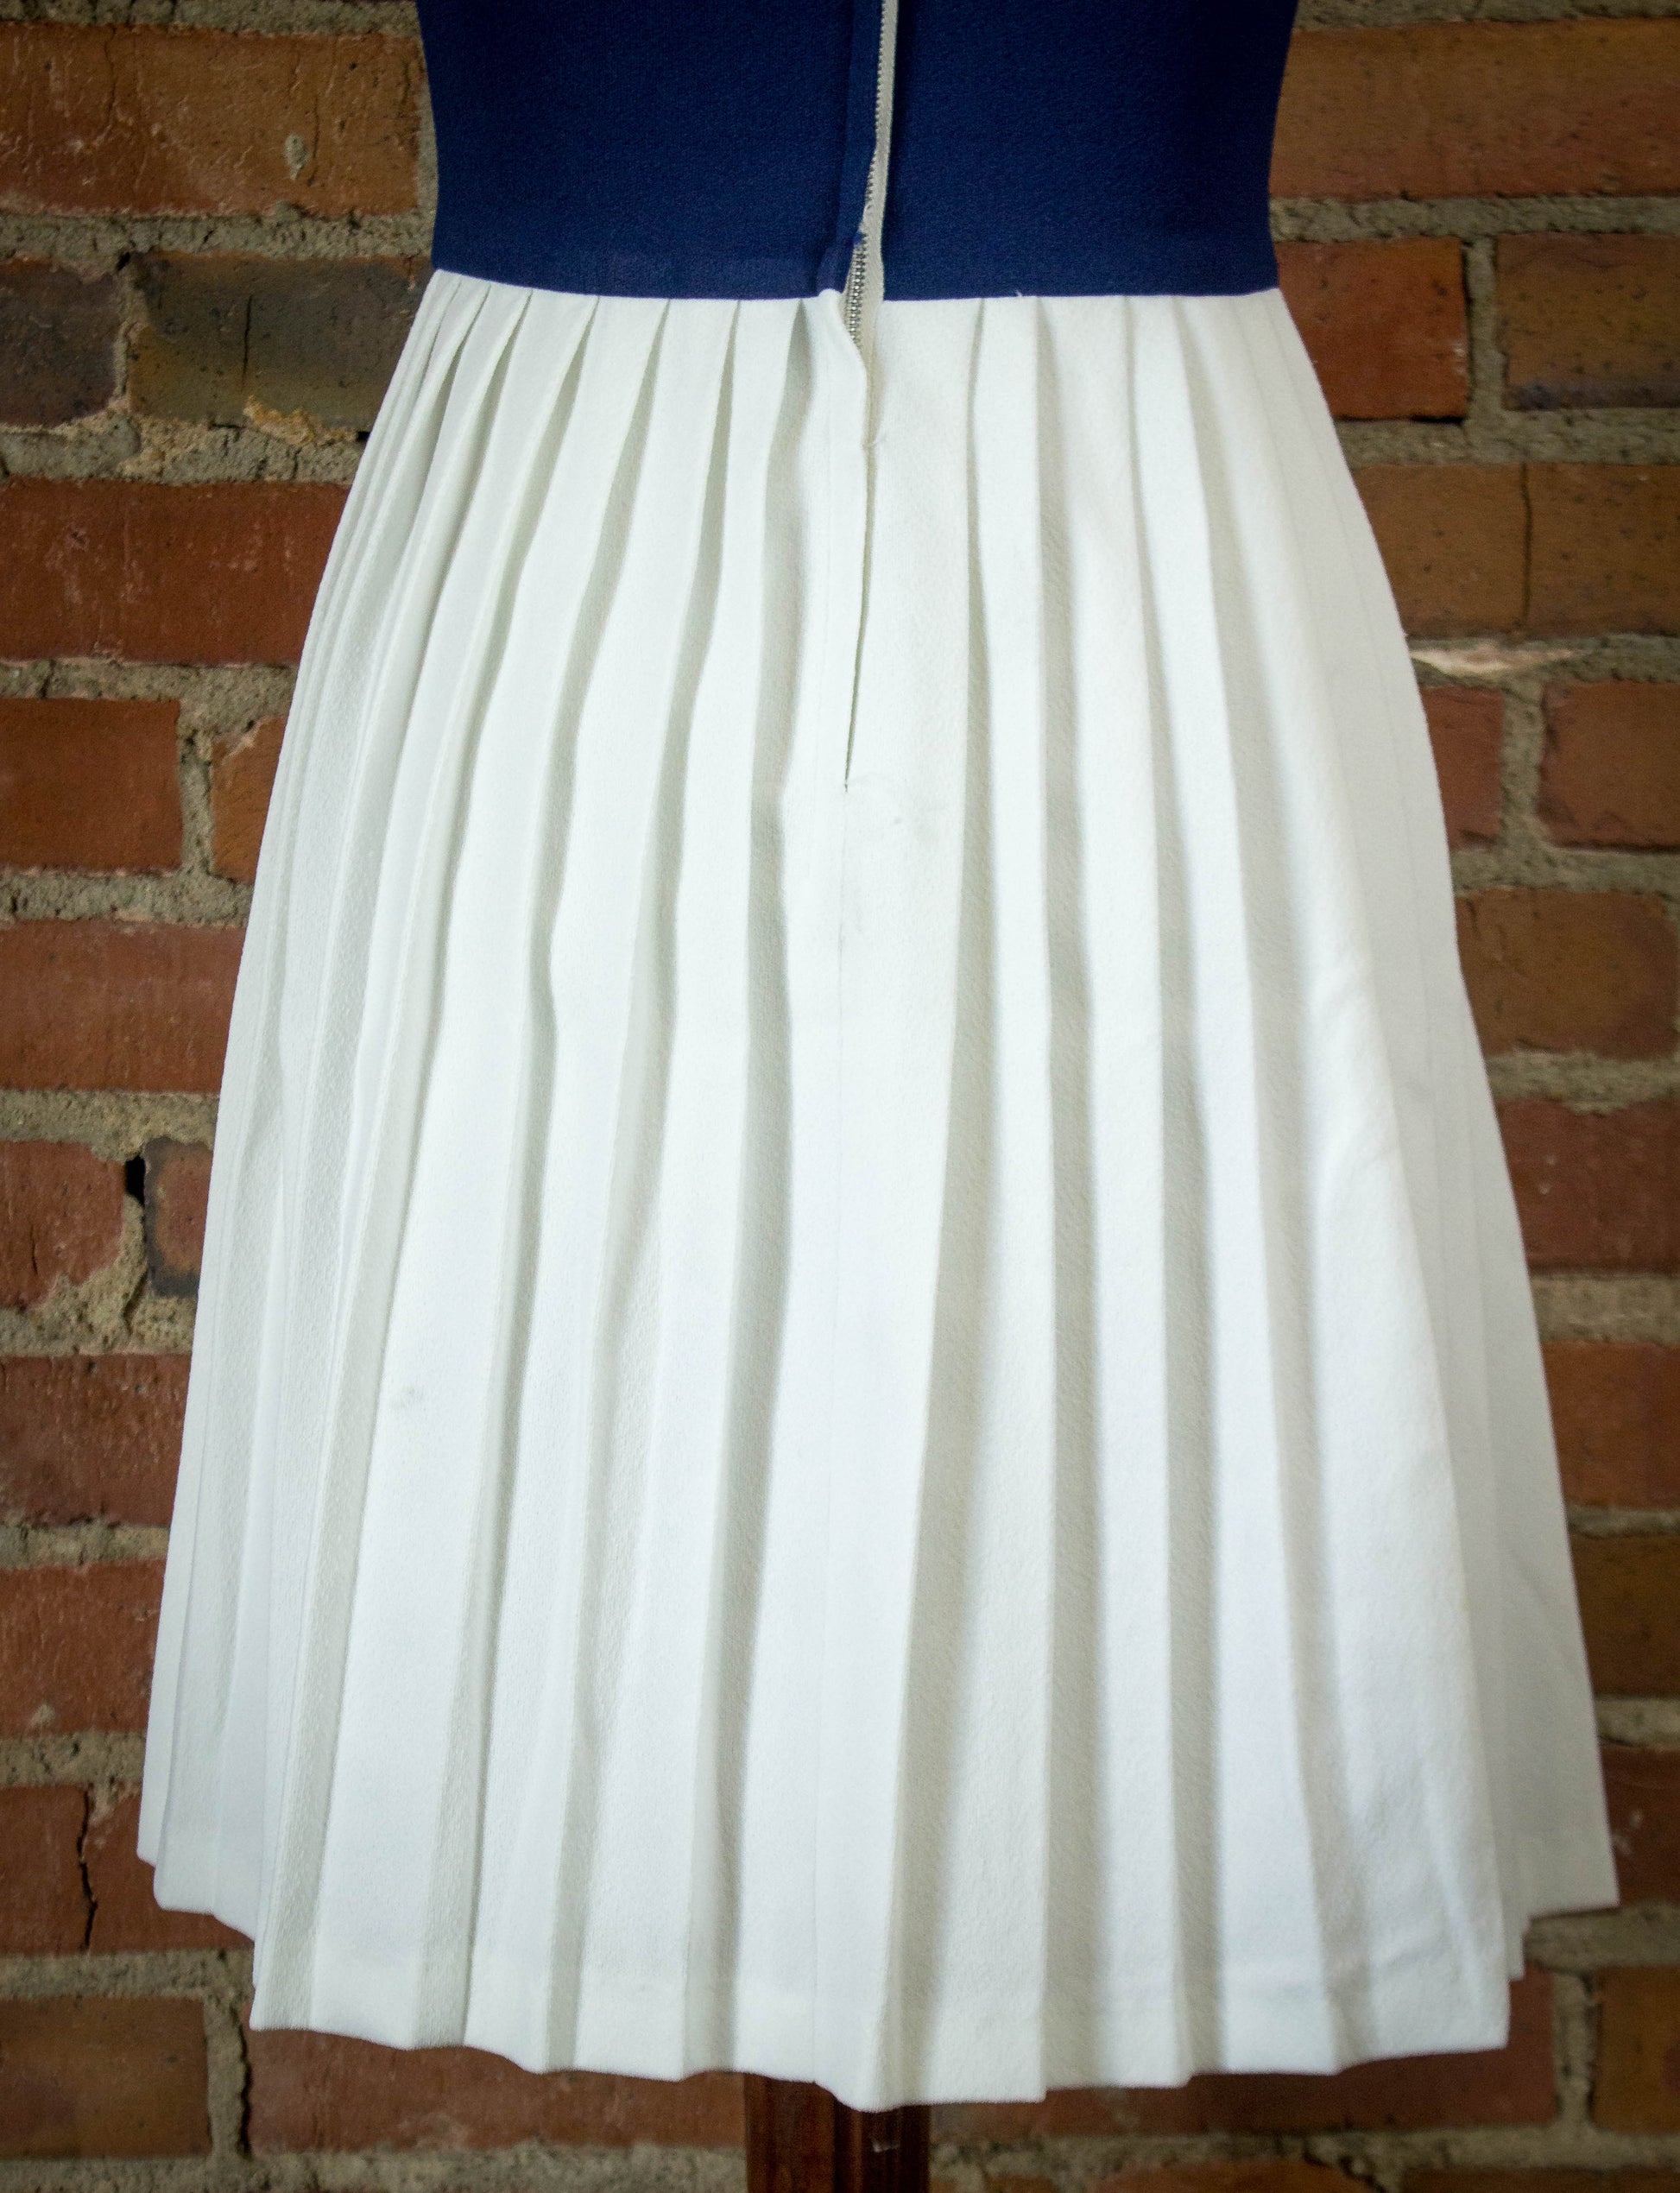 Vintage 70s Mod Style Blue White Pleated Dress Size Medium